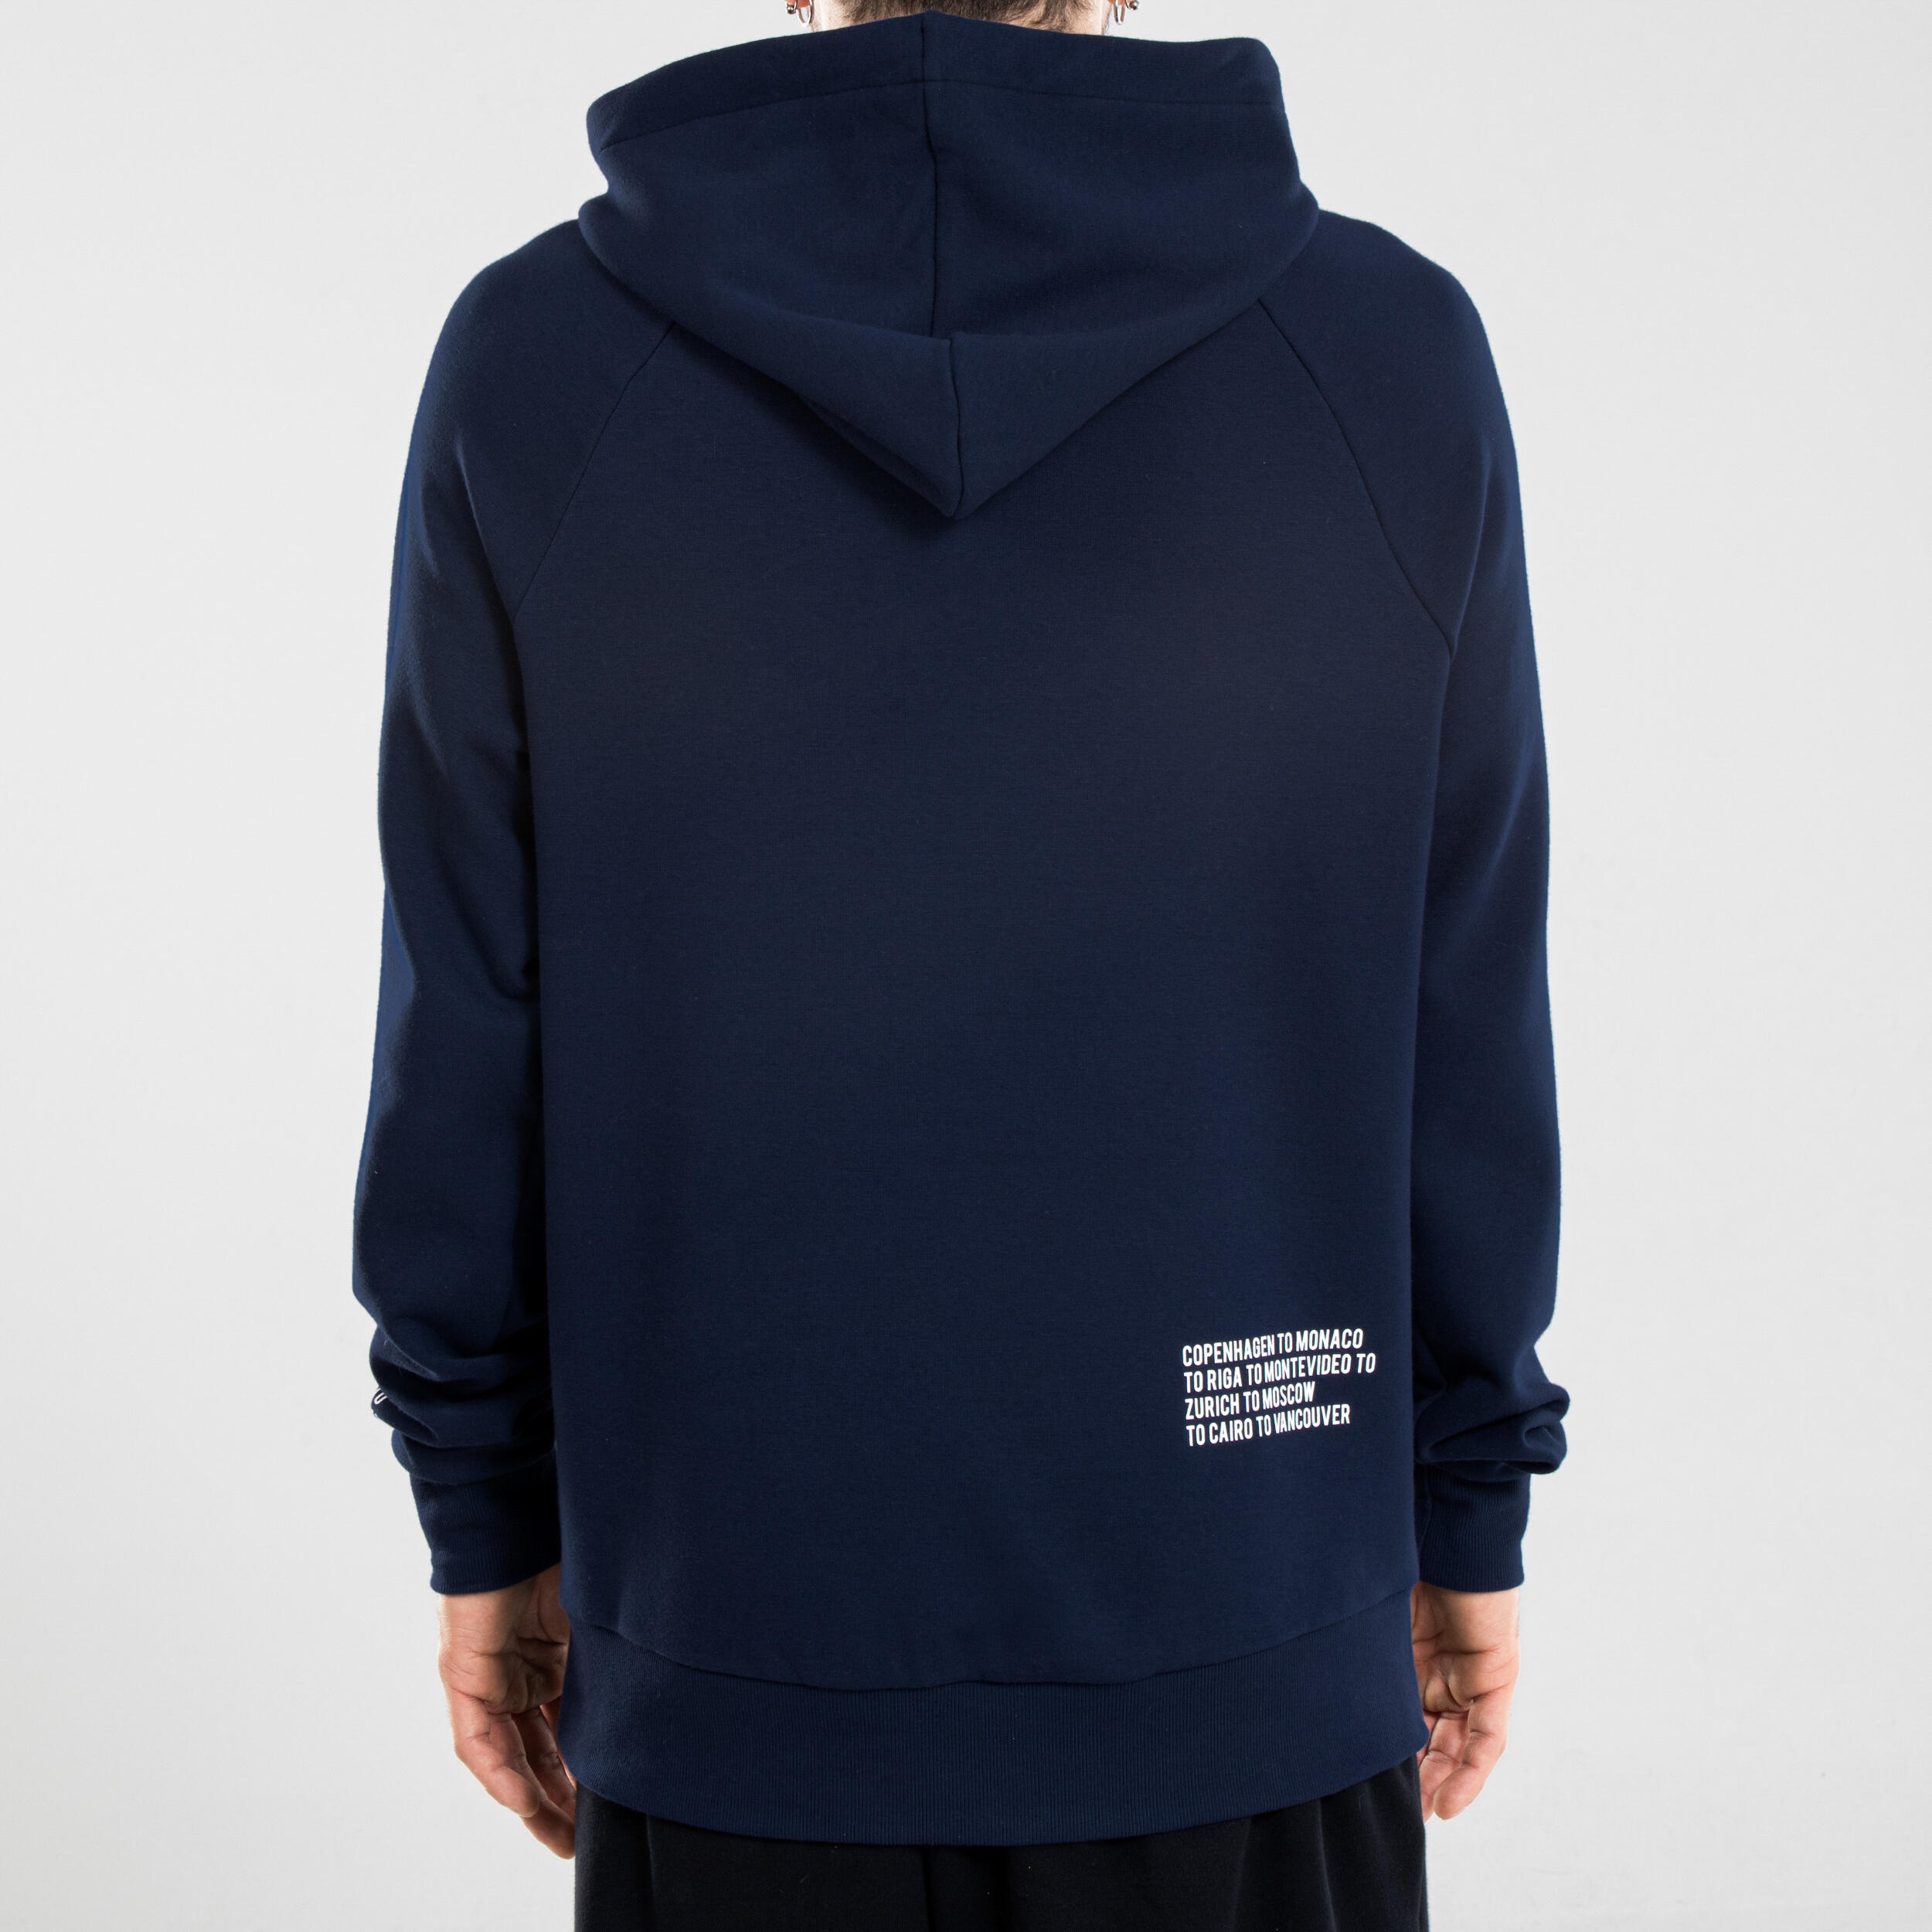 Urban Dance Hooded Sweatshirt - Navy Blue 5/8